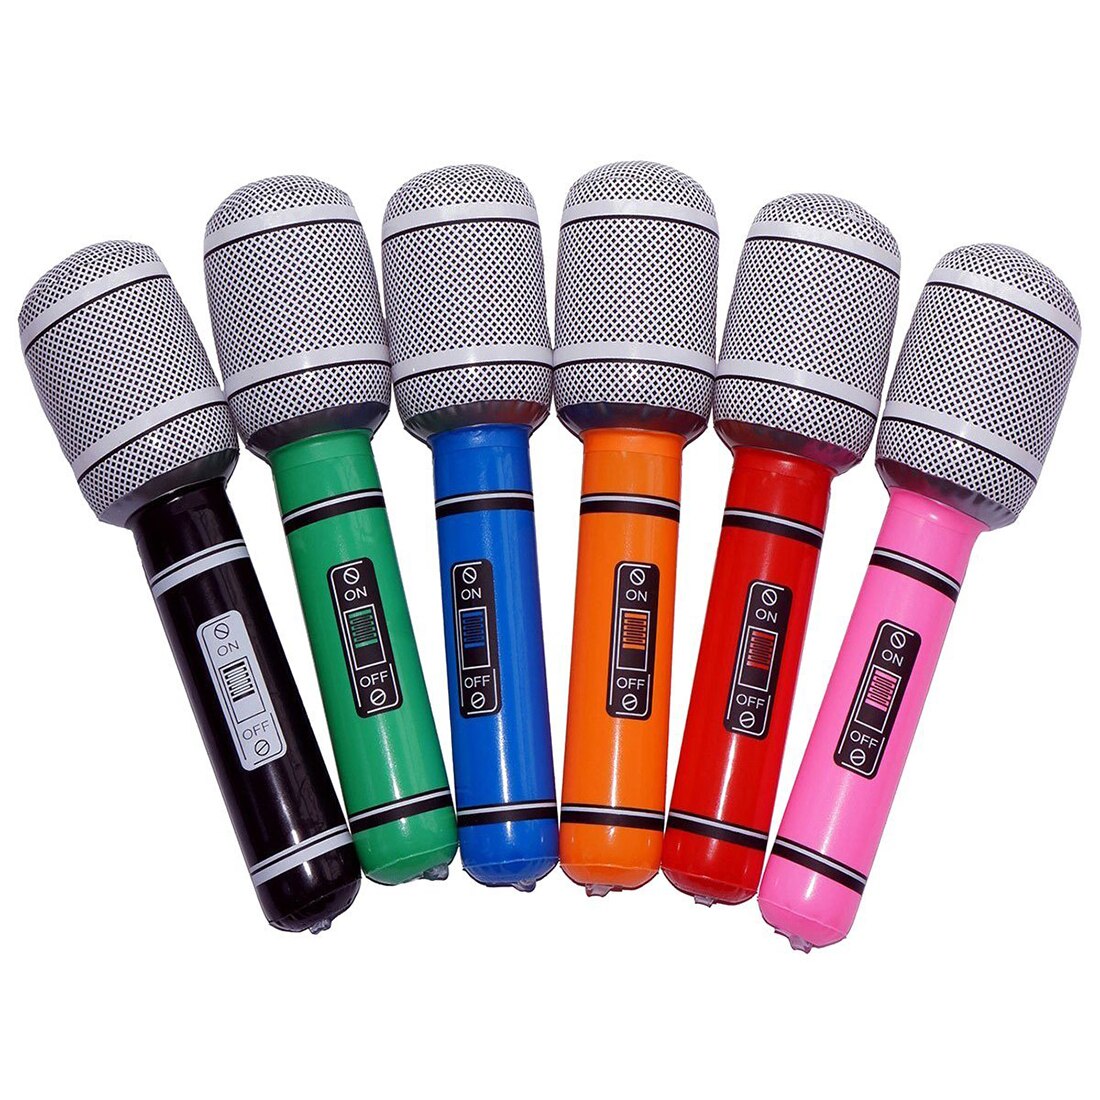 LCLL-Opblaasbare Plastic Microfoon 24CM voor Party Favor Kids Toy -6 stuks (Willekeurige Kleur)